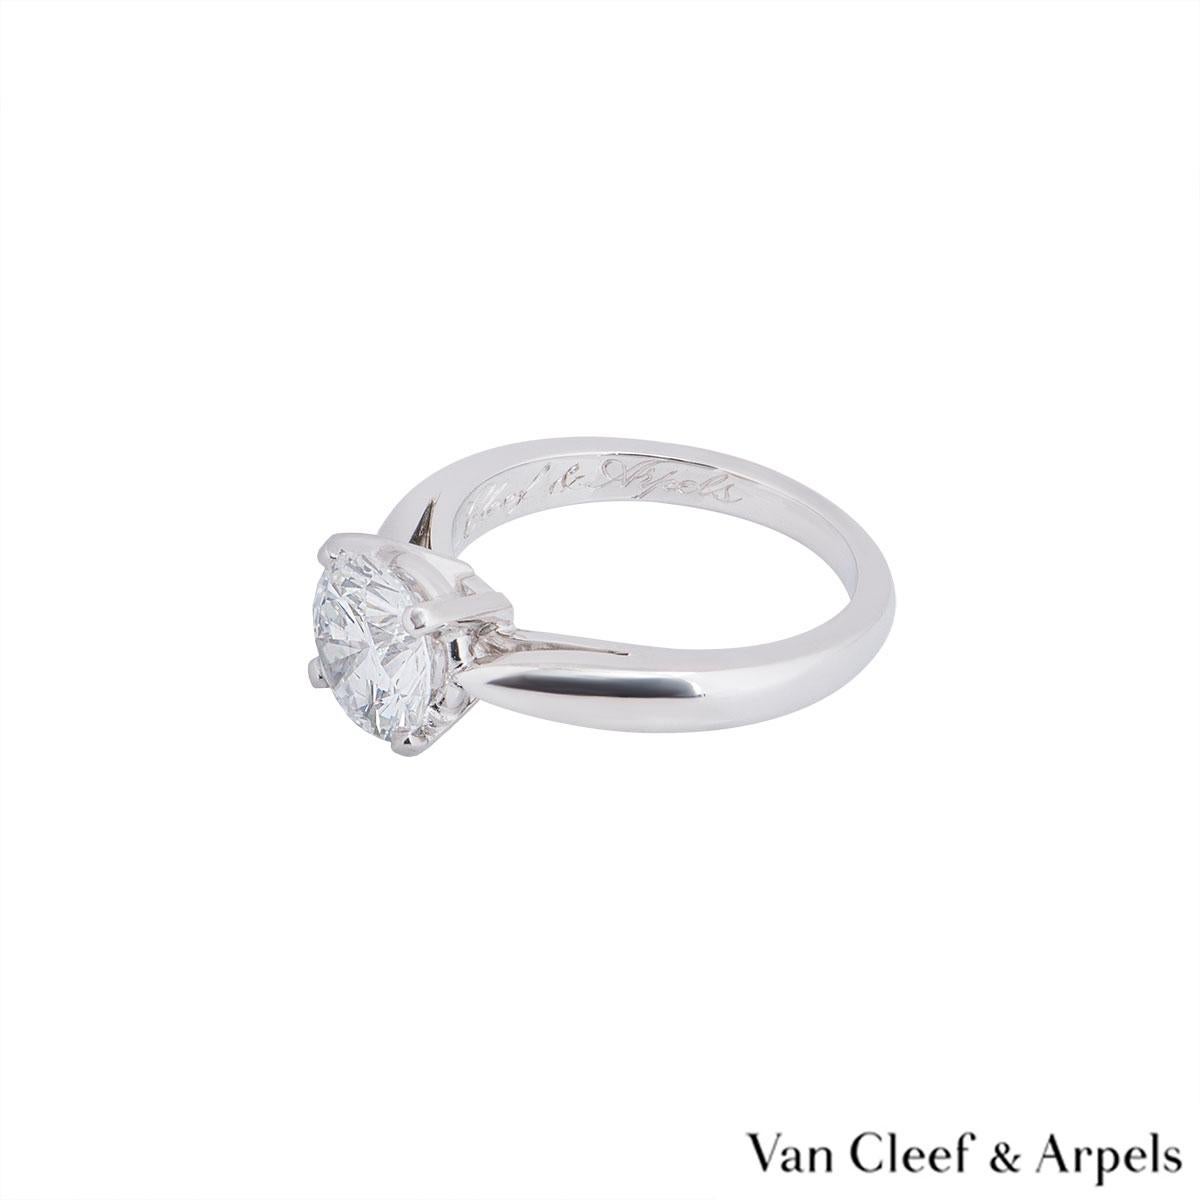 Round Cut Van Cleef & Arpels Round Diamond Bonheur Solitaire Engagement Ring 1.64ct GIA 